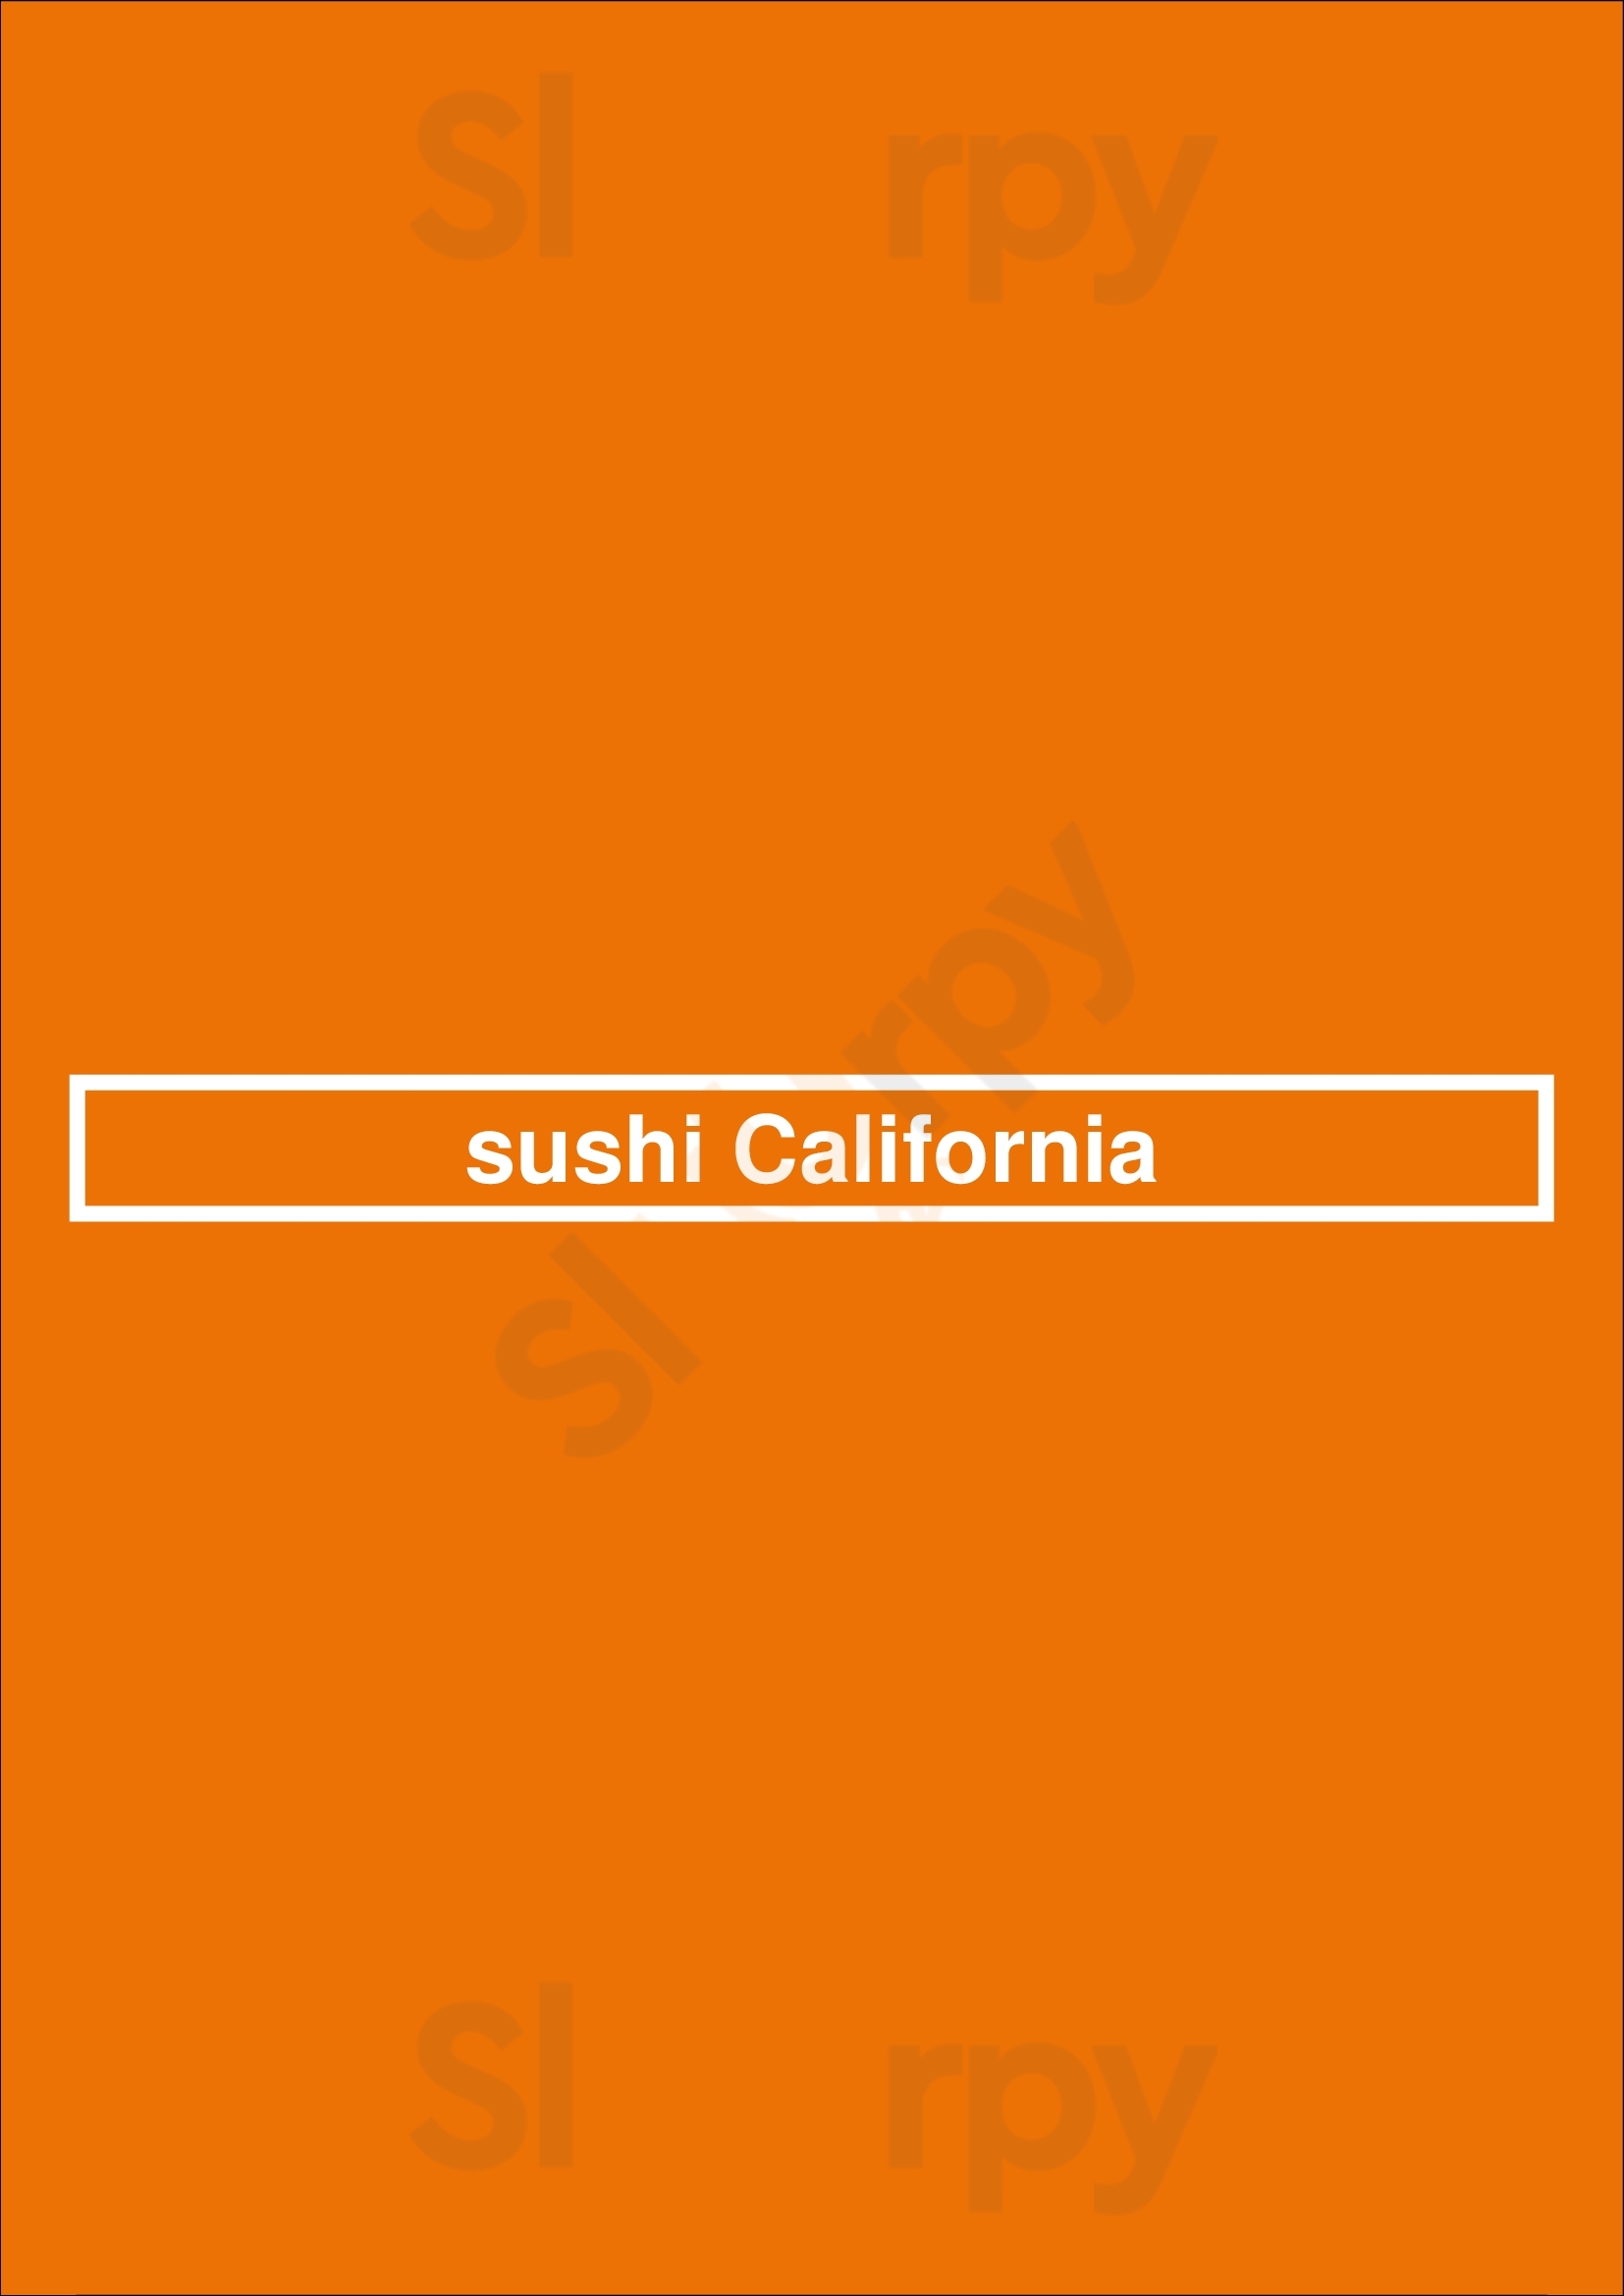 Sushi California Vancouver Menu - 1